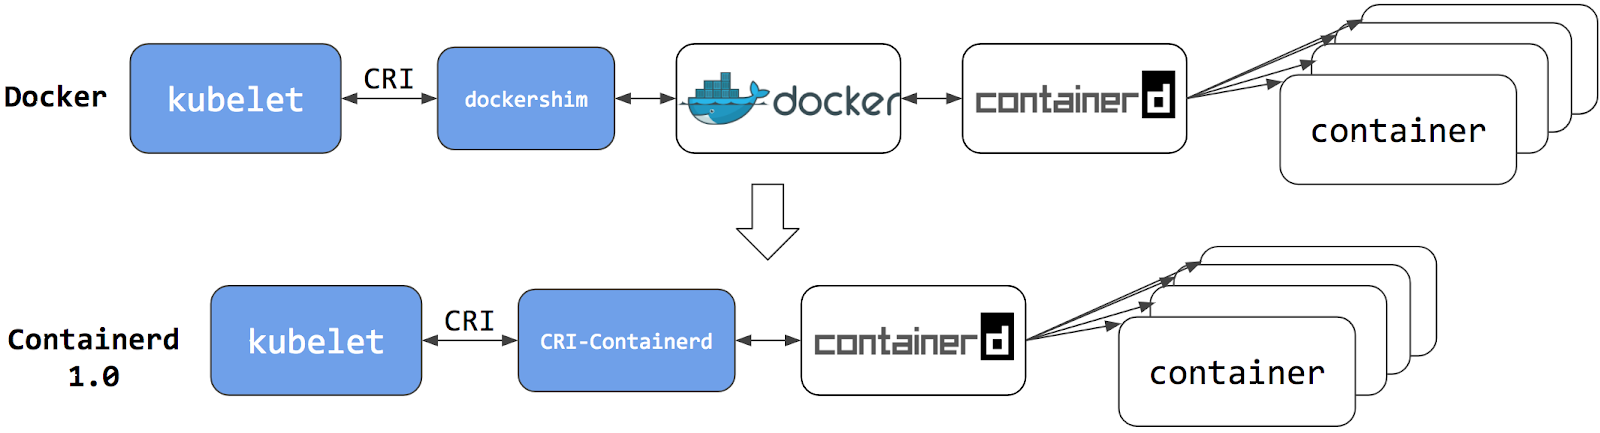 Интеграция containerd с Kubernetes, заменяющая Docker, готова к production - 2